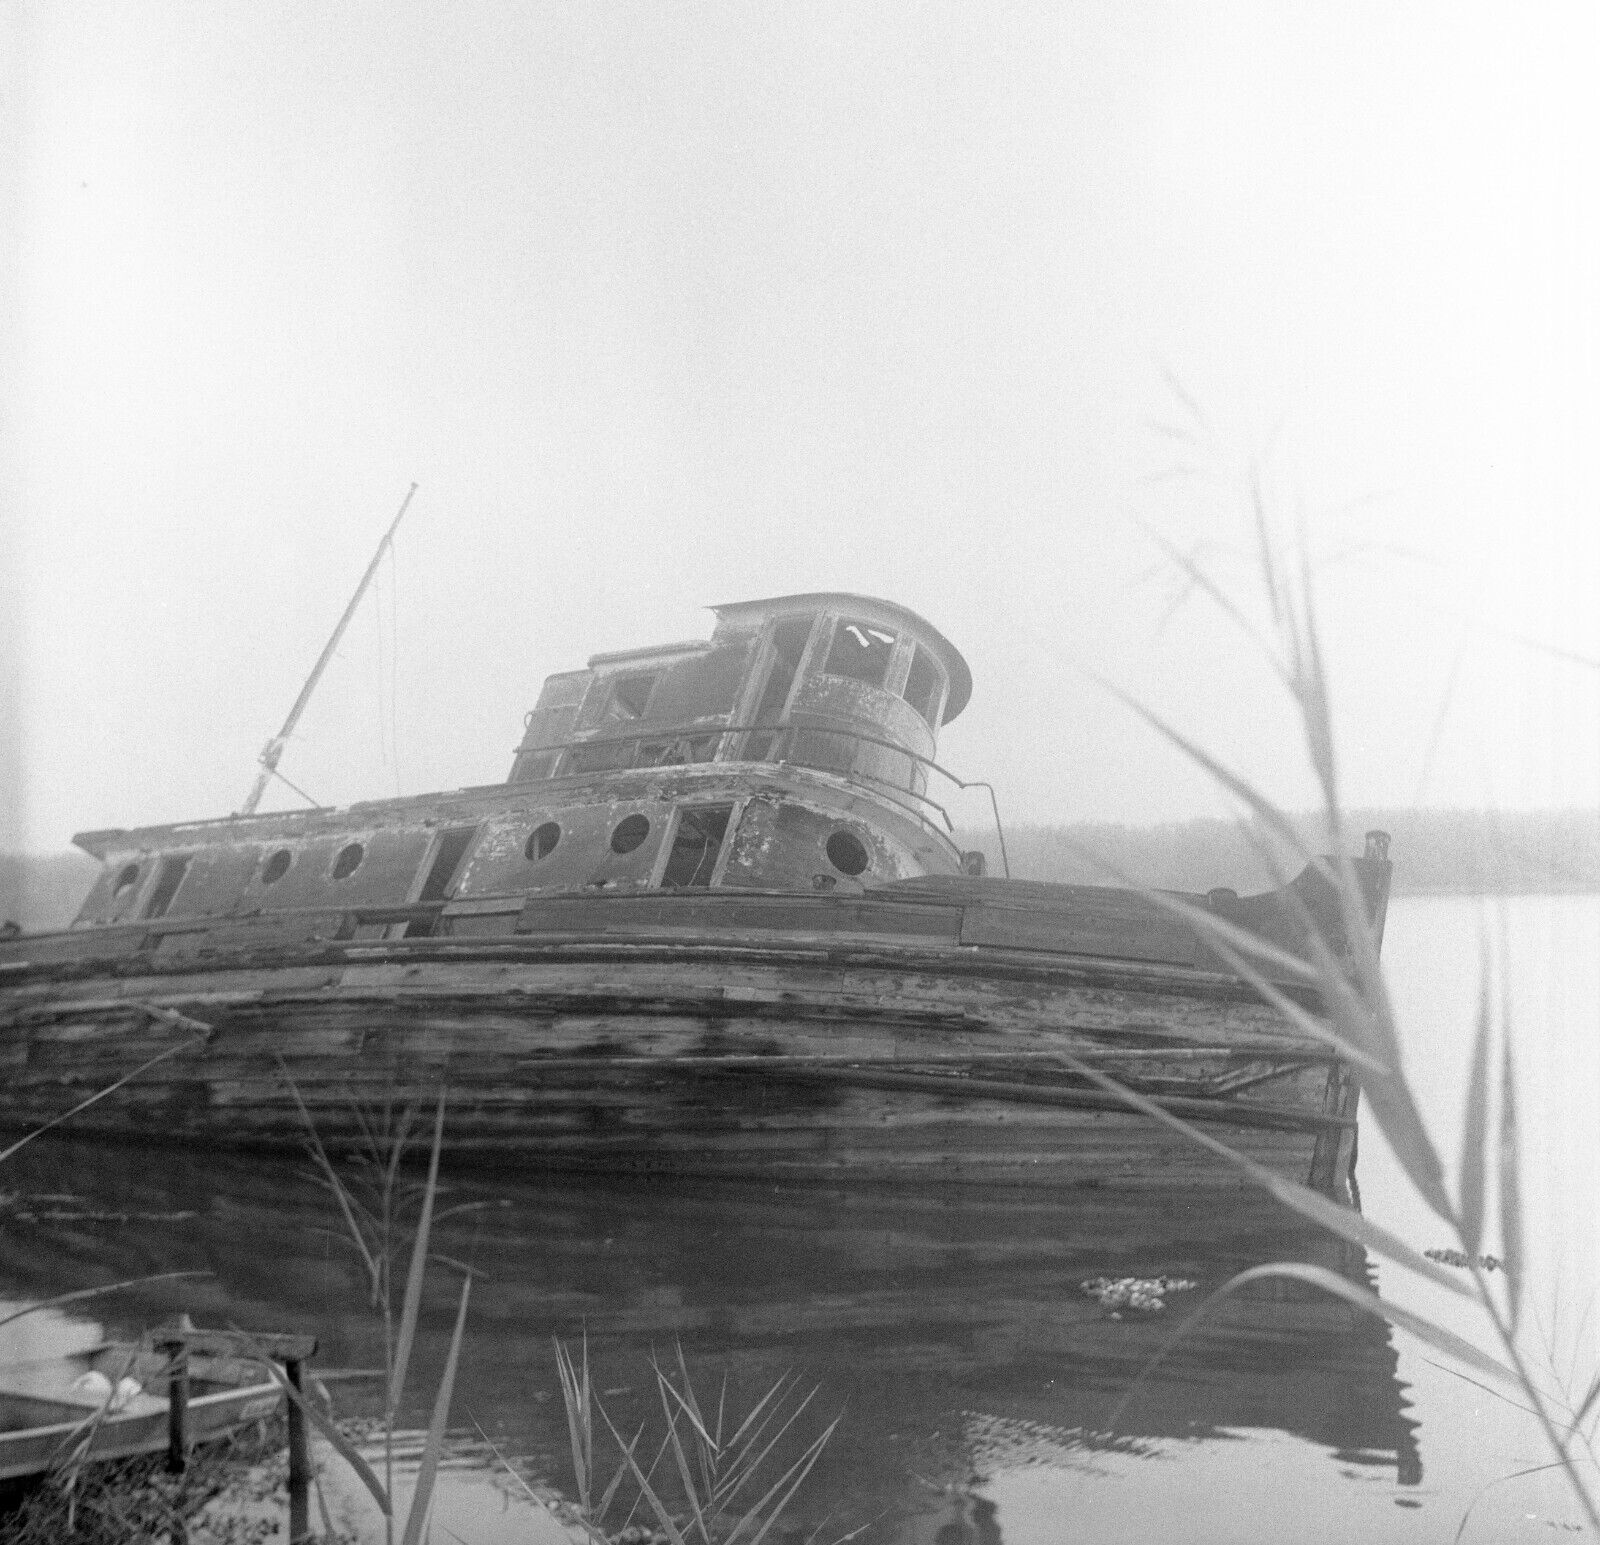 Soft Focus Shipwreck Hurricane Audrey Medium Format (6X6 cm) B&W Negative 1970